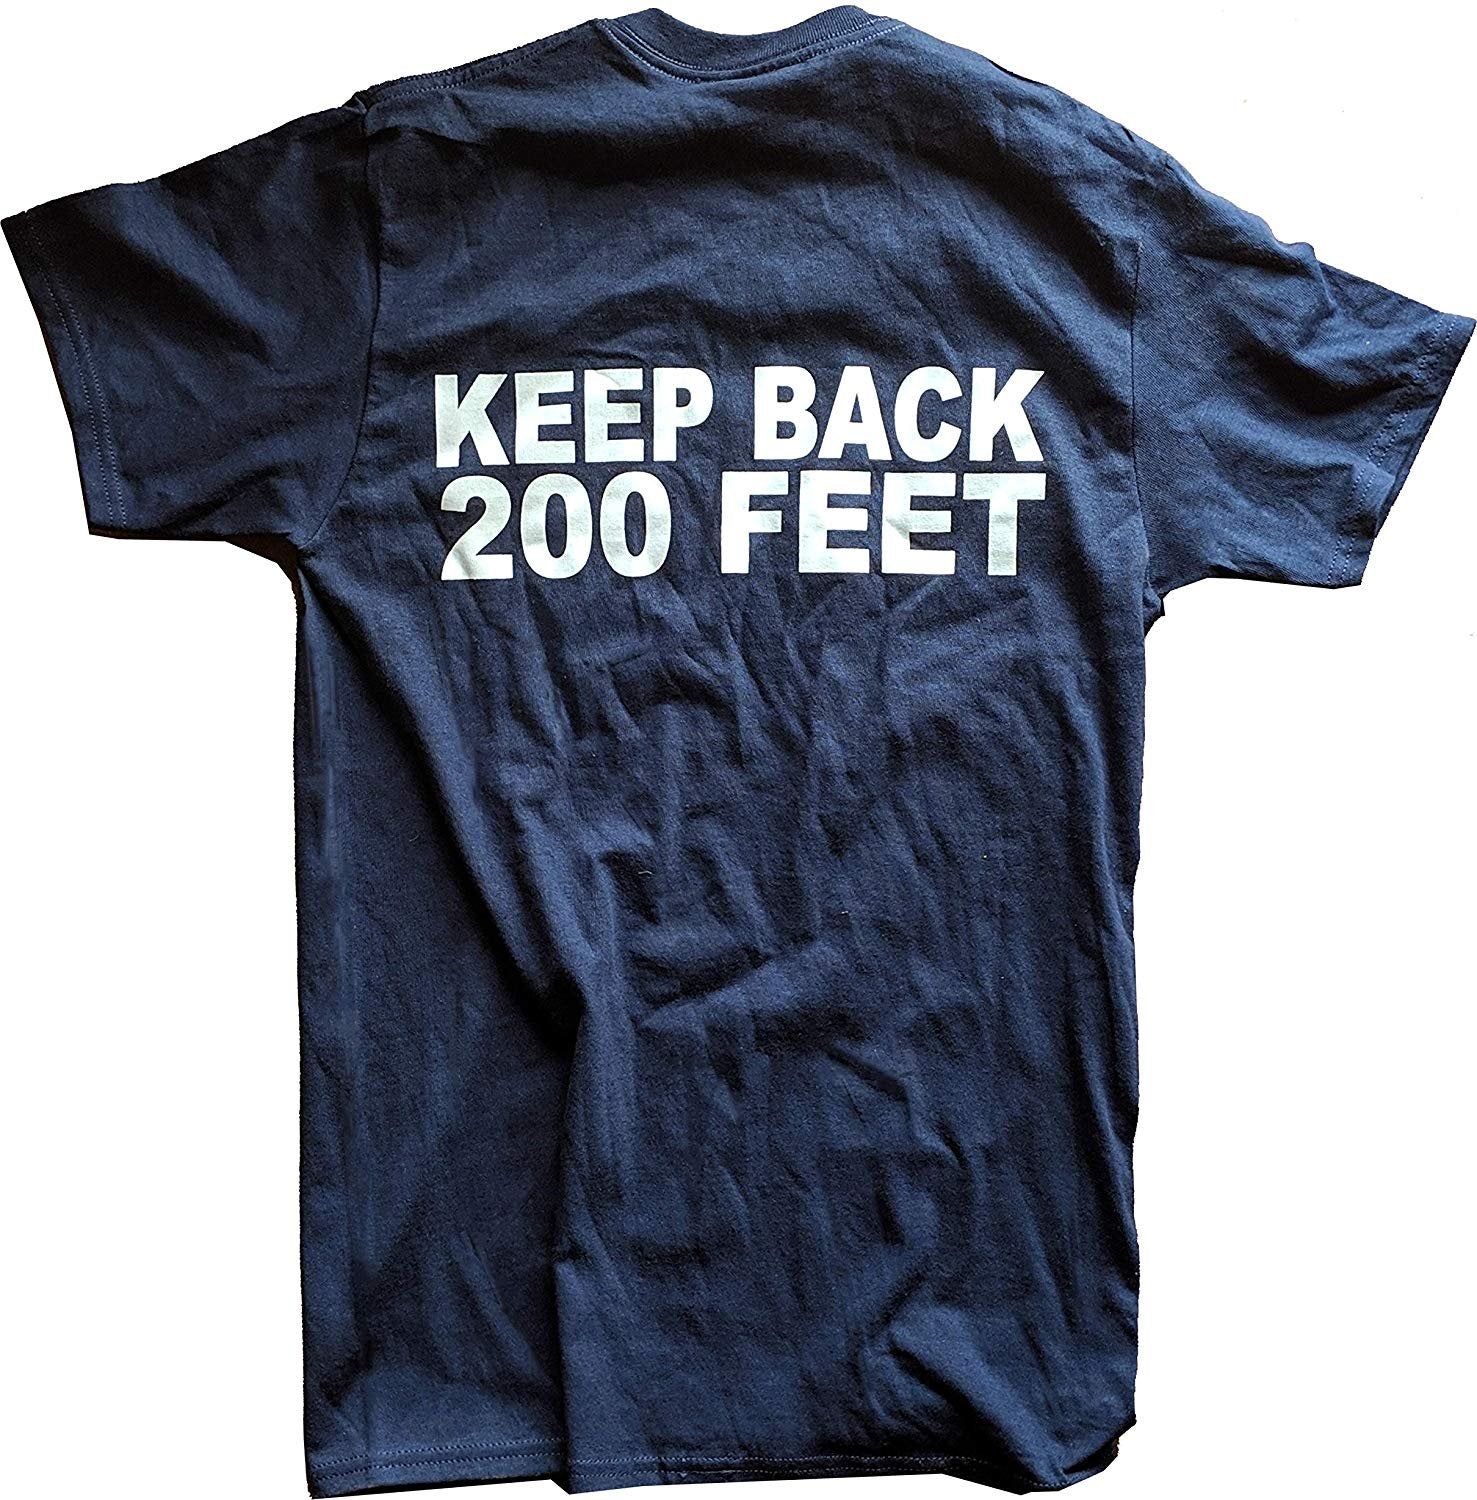 FDNY Herren Keep Back 200 Fuß T-Shirt Marineblaues T-Shirt